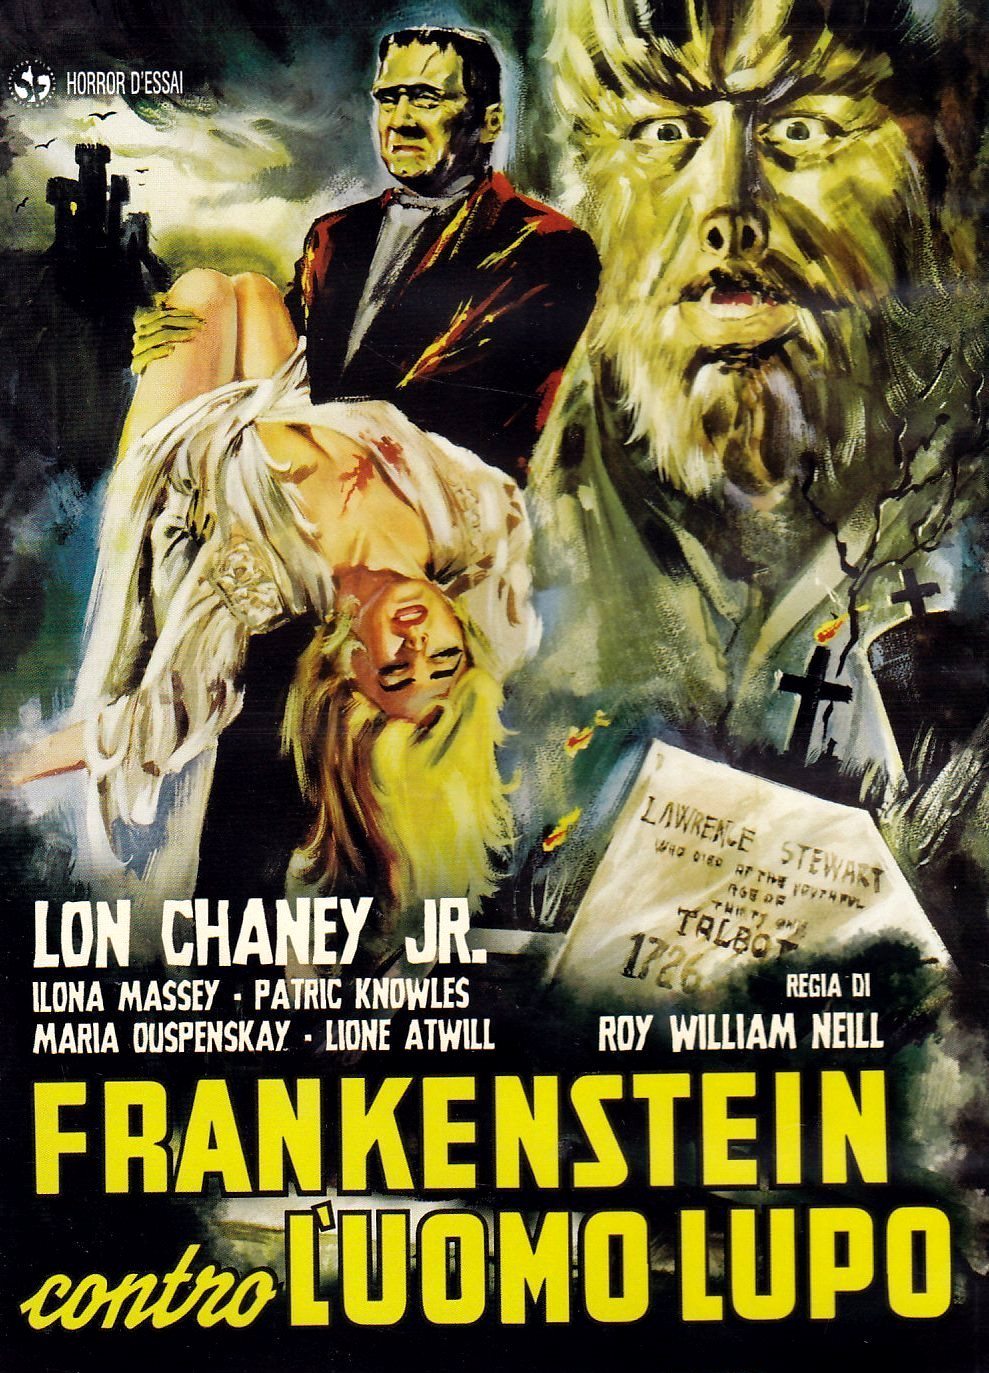 Frankenstein contro l’uomo lupo [B/N] (1943)